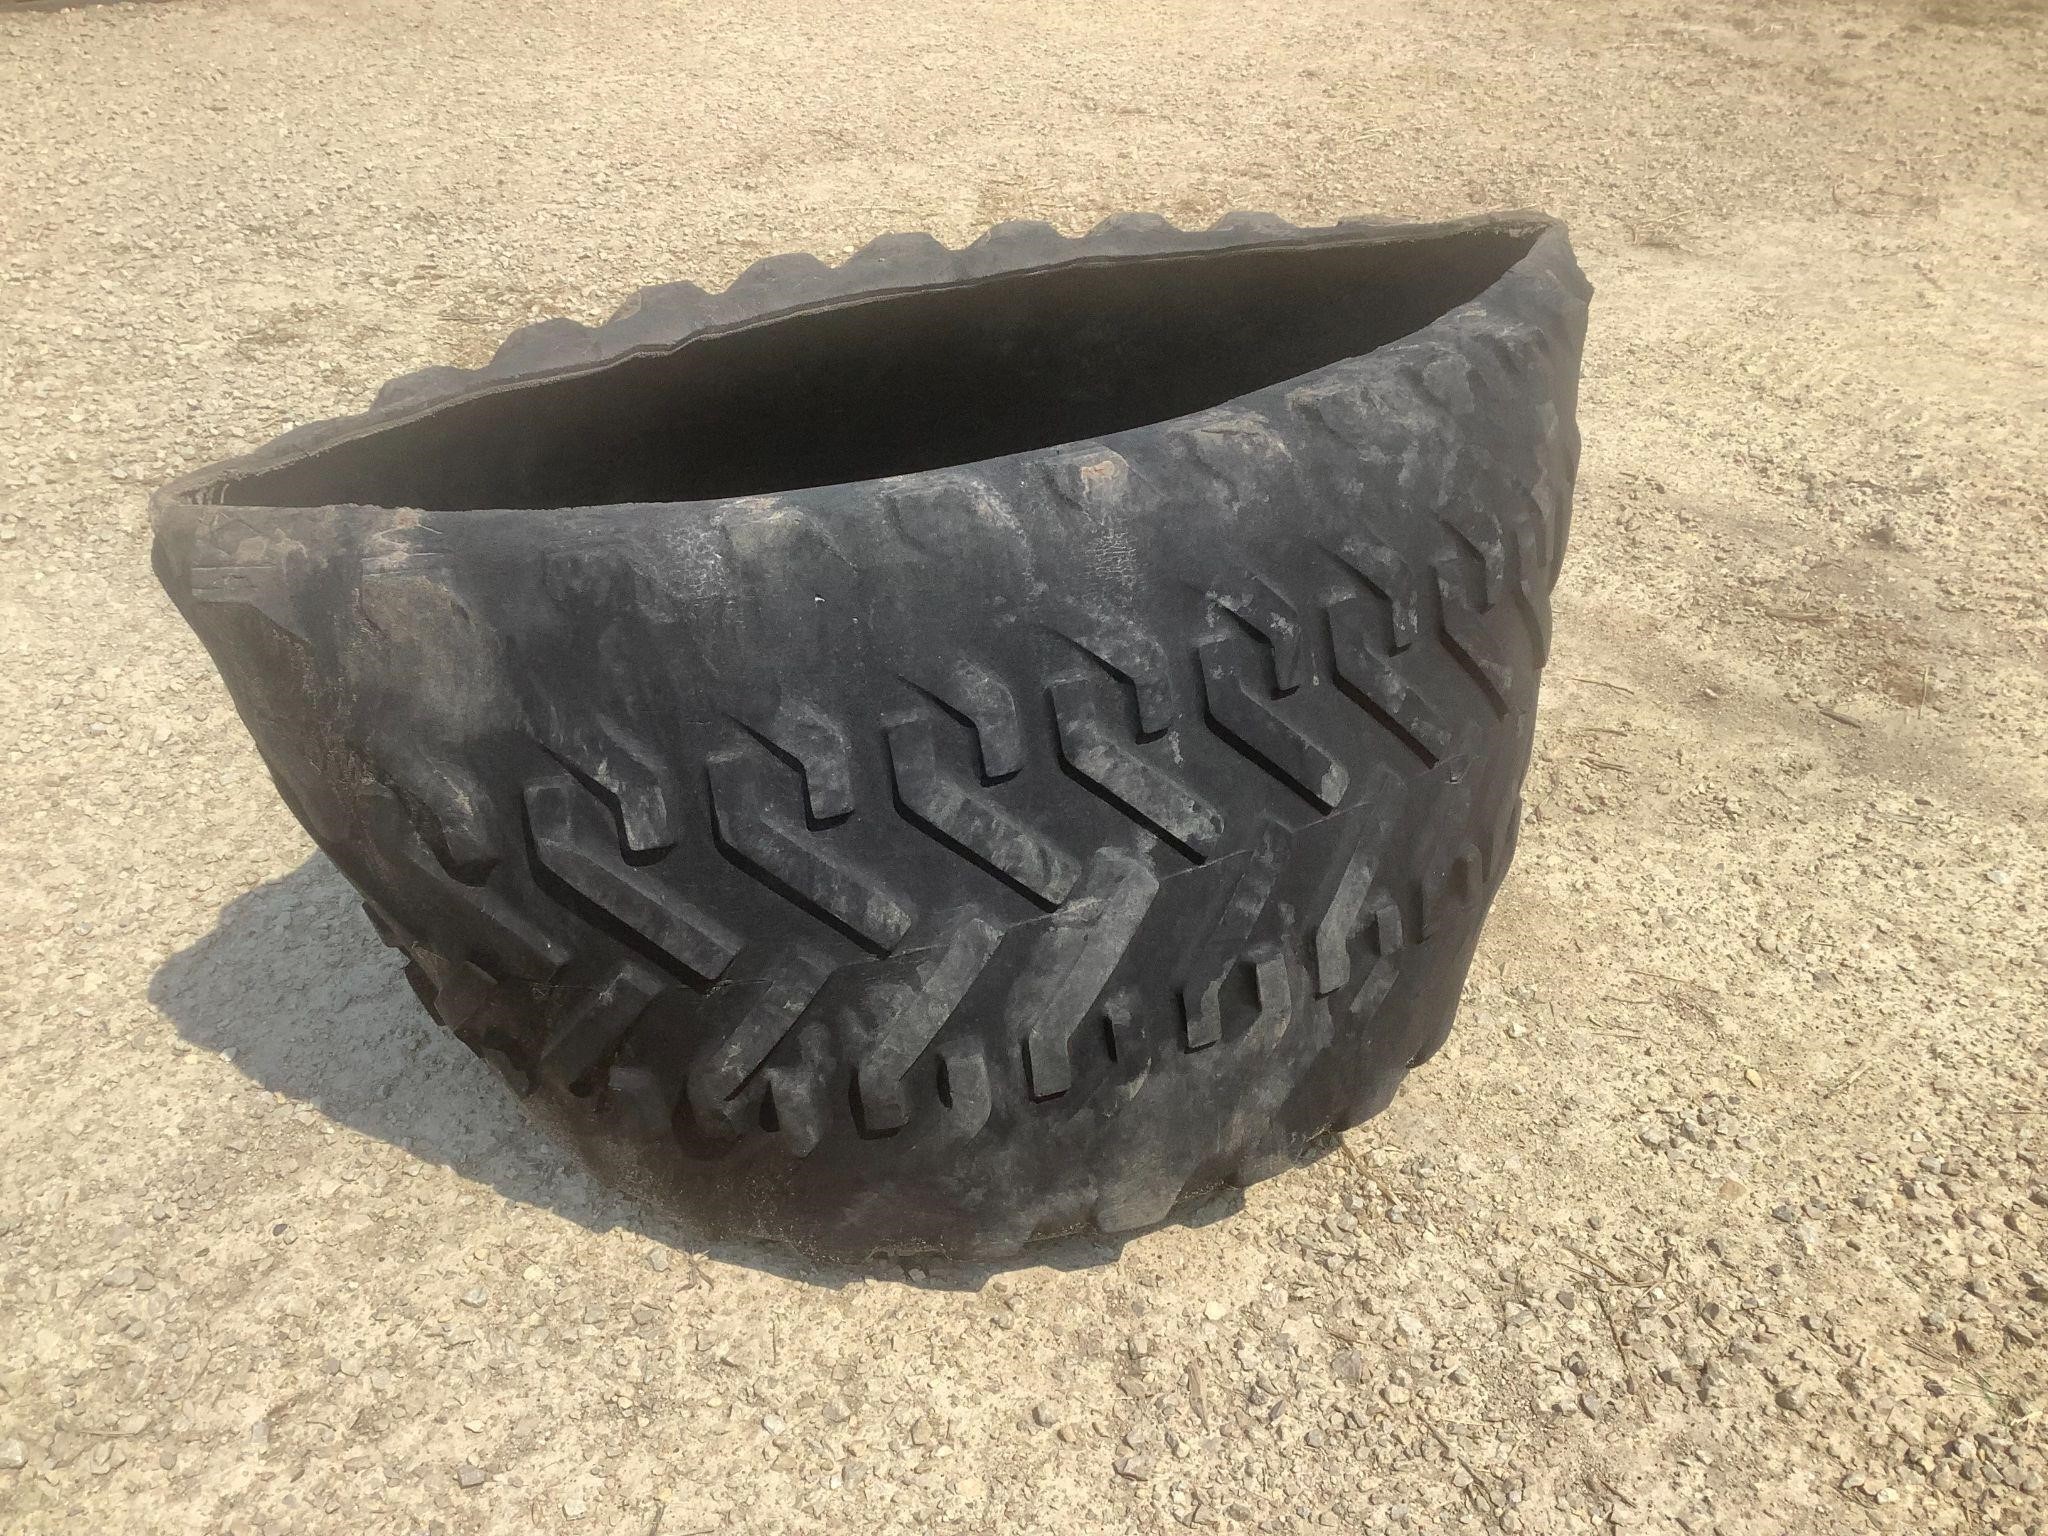 Rubber Tire Feeder